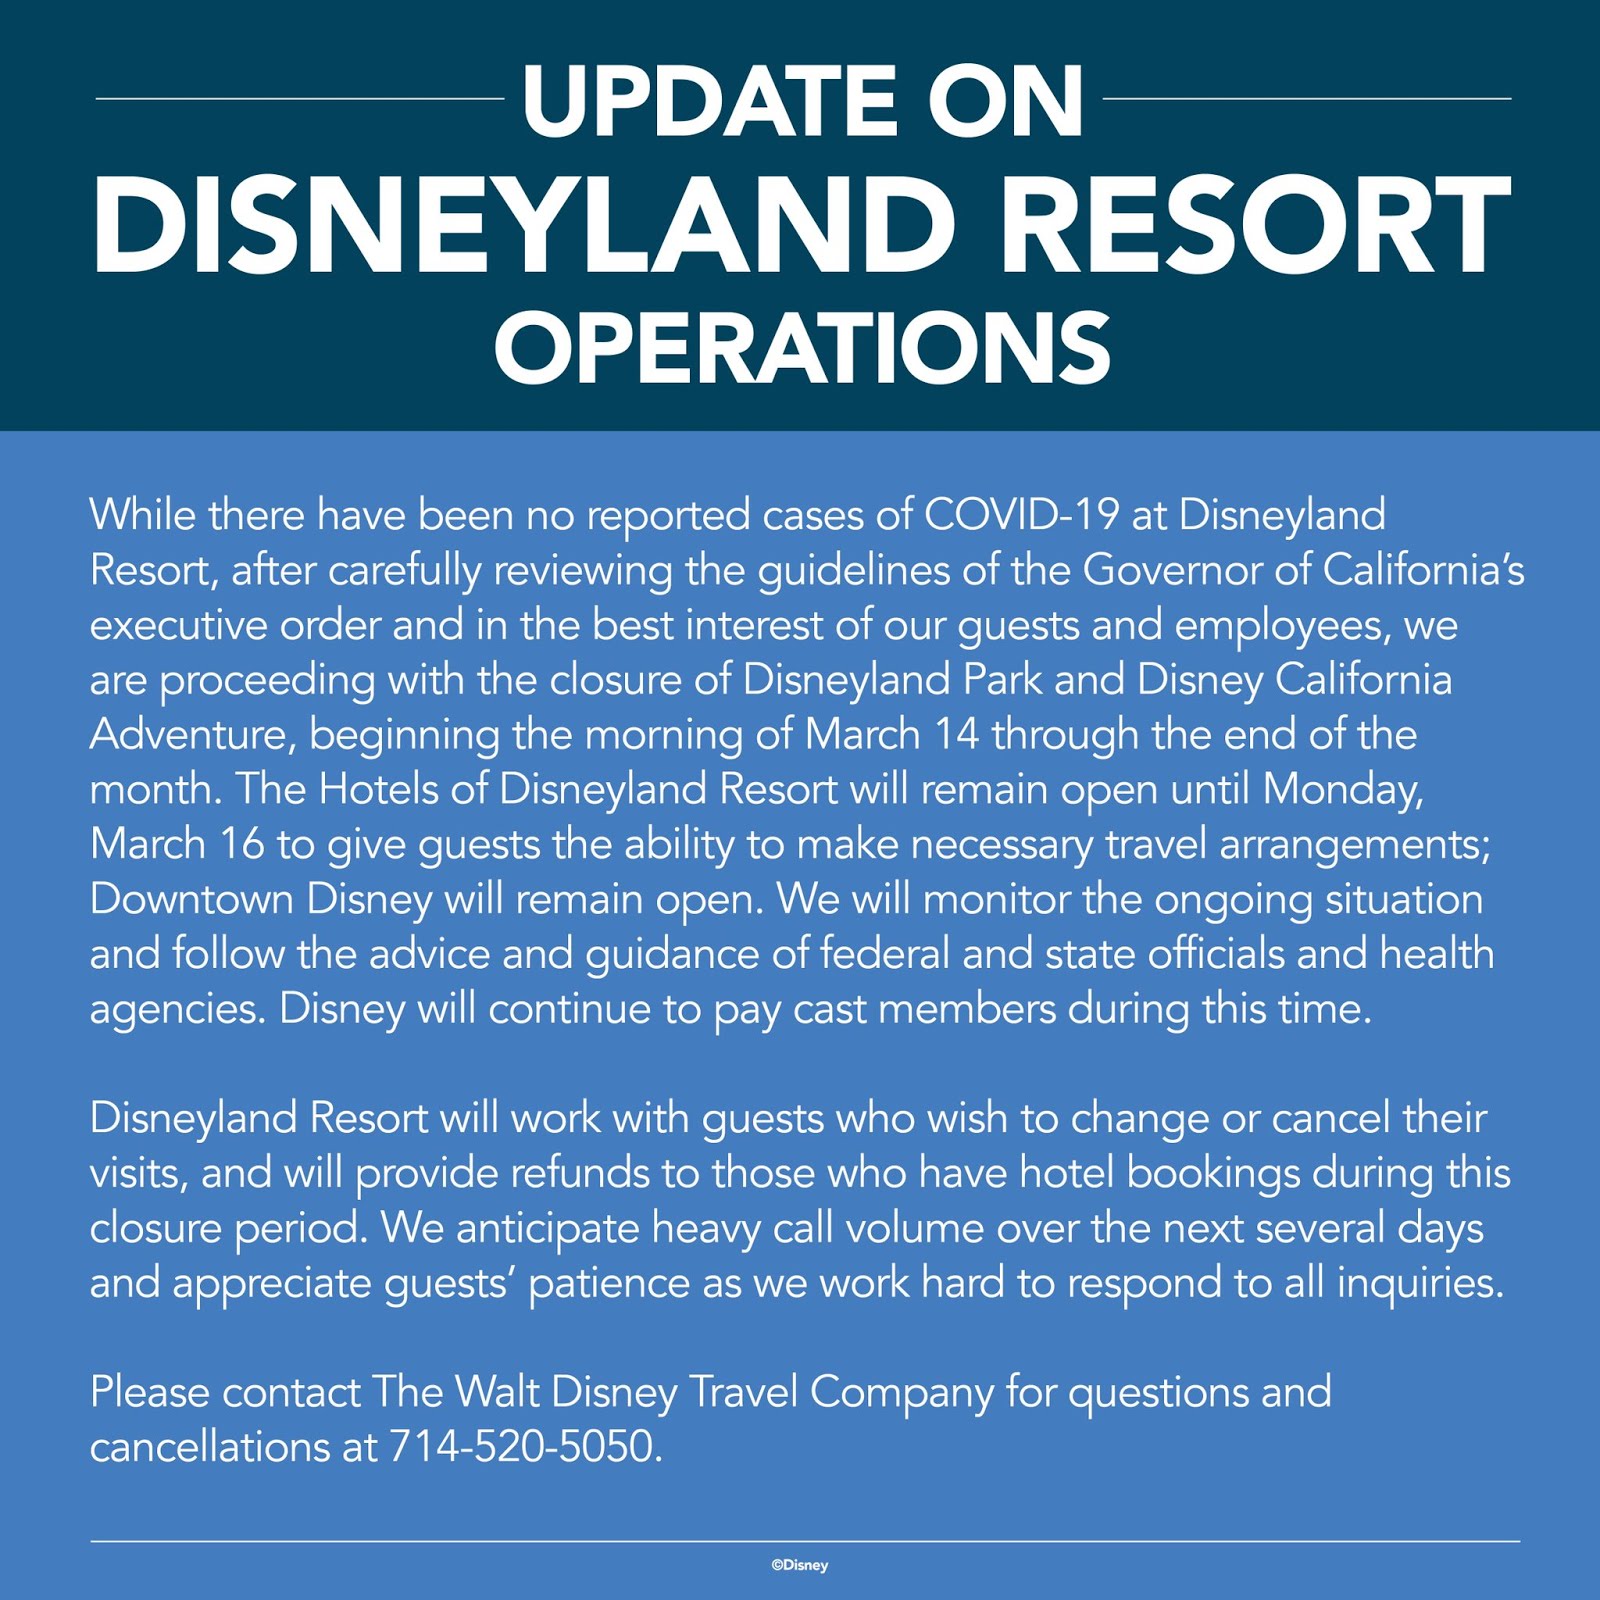 Disney Announces Closure of Disneyland, Walt Disney World, and